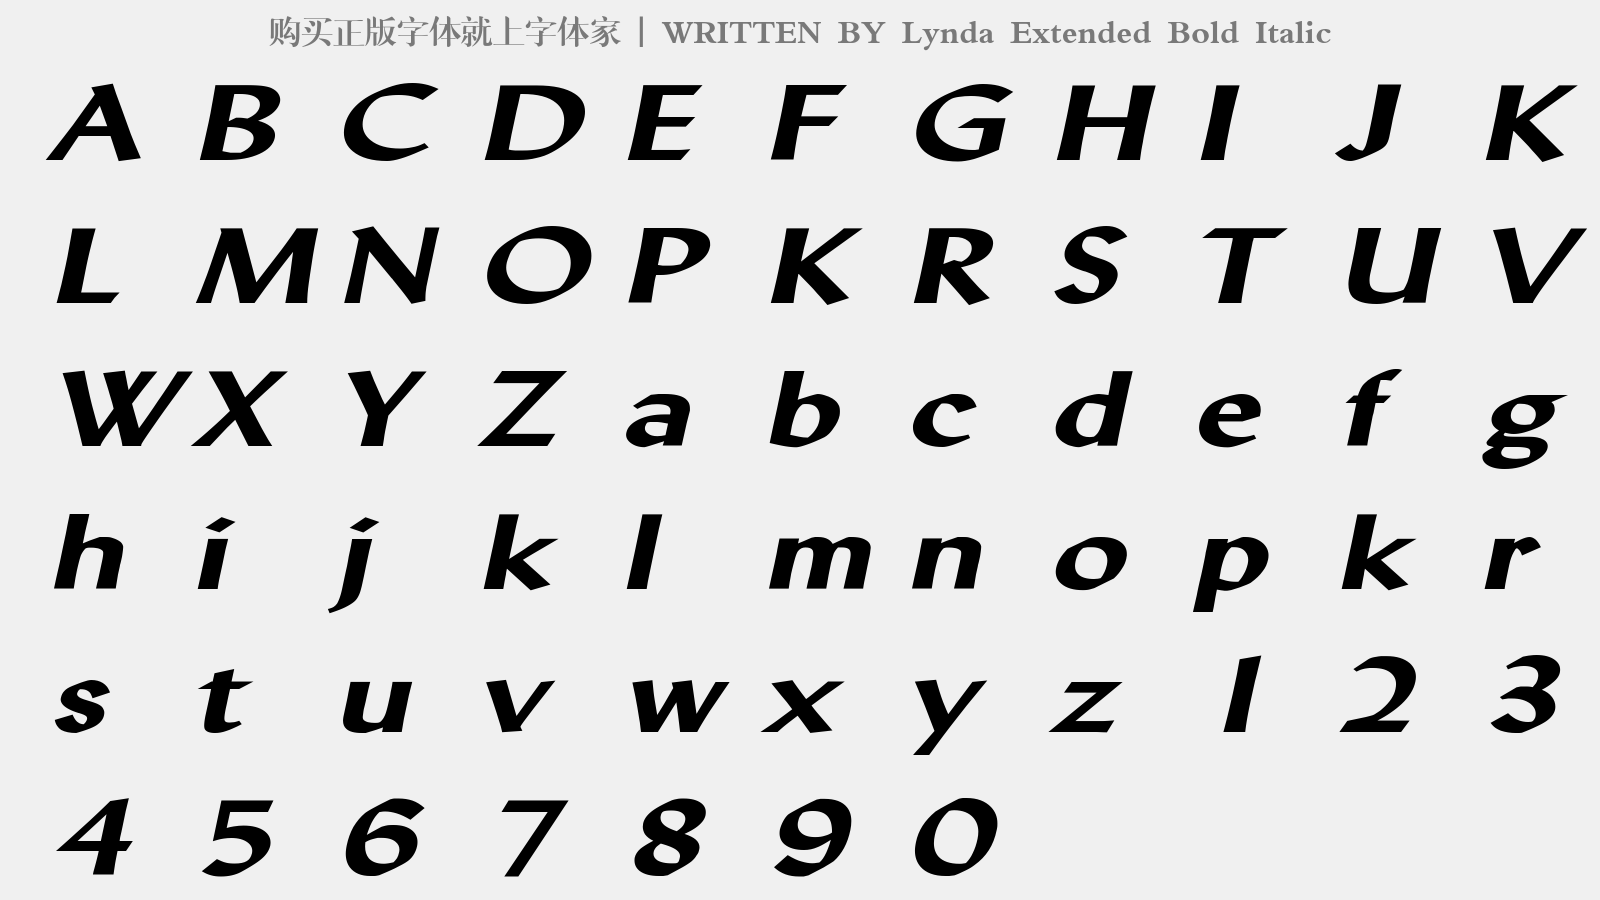 Lynda Extended Bold Italic - 大写字母/小写字母/数字